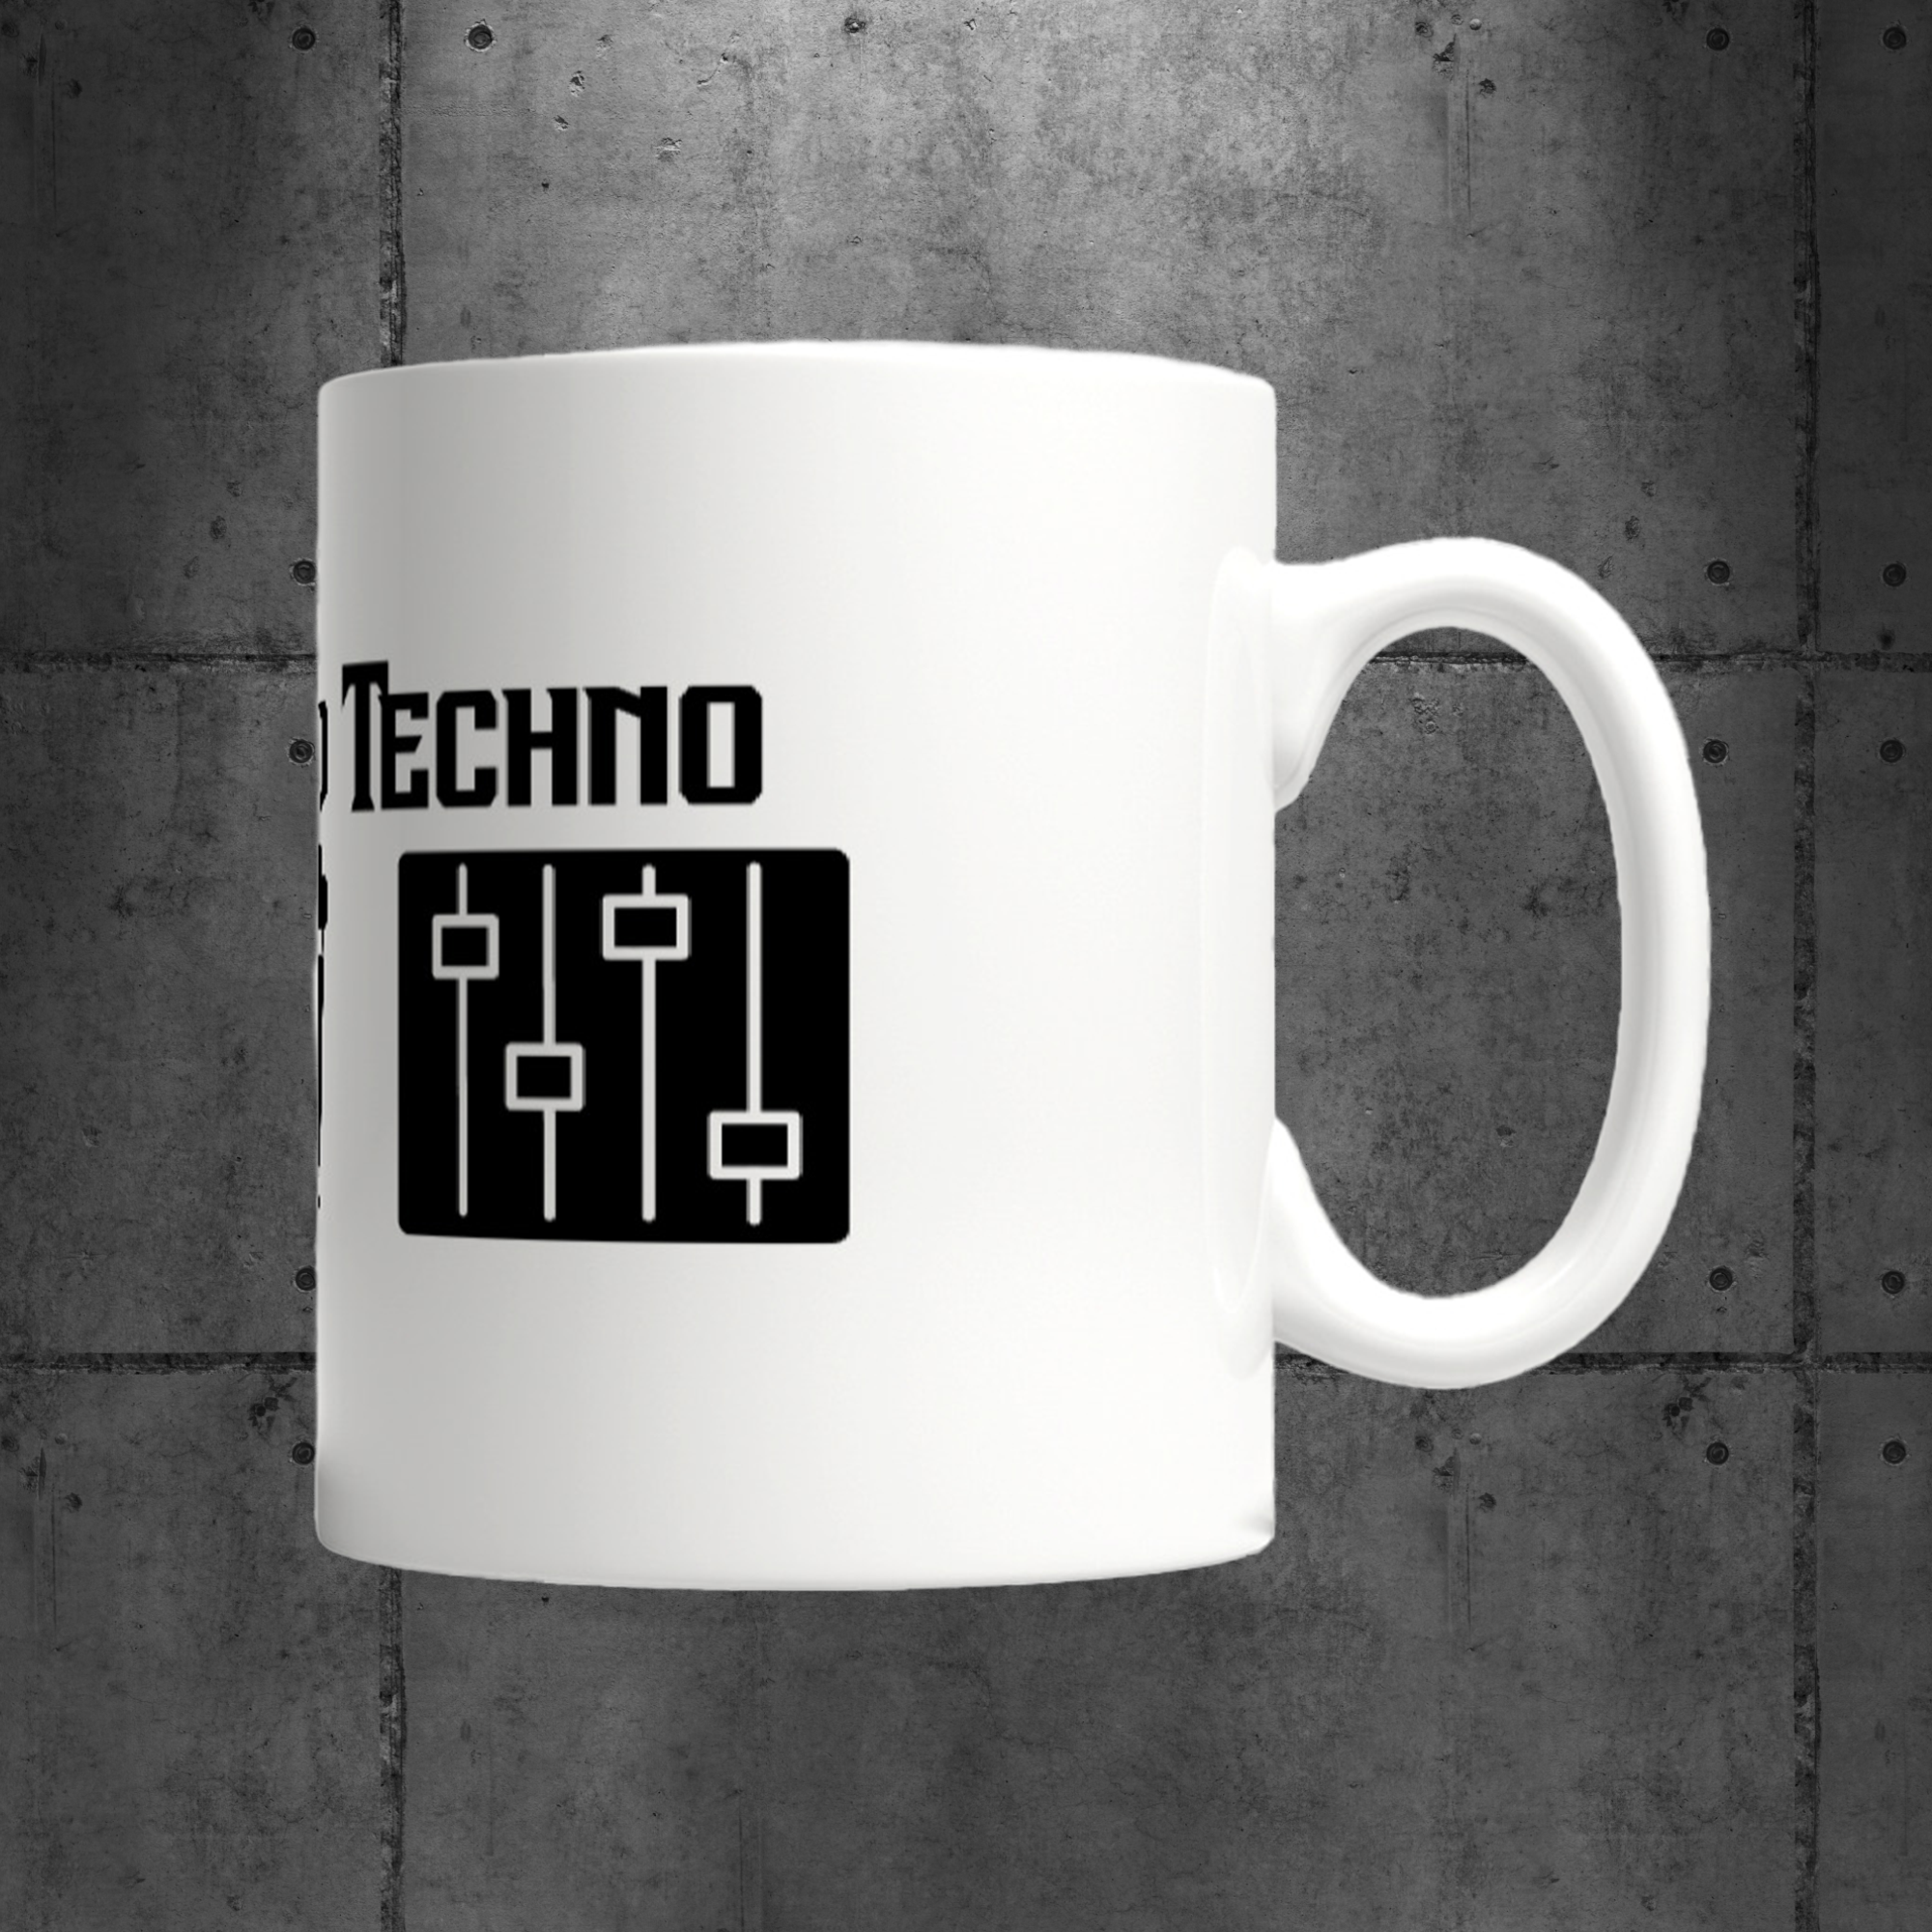 Coffee And Techno Tasse